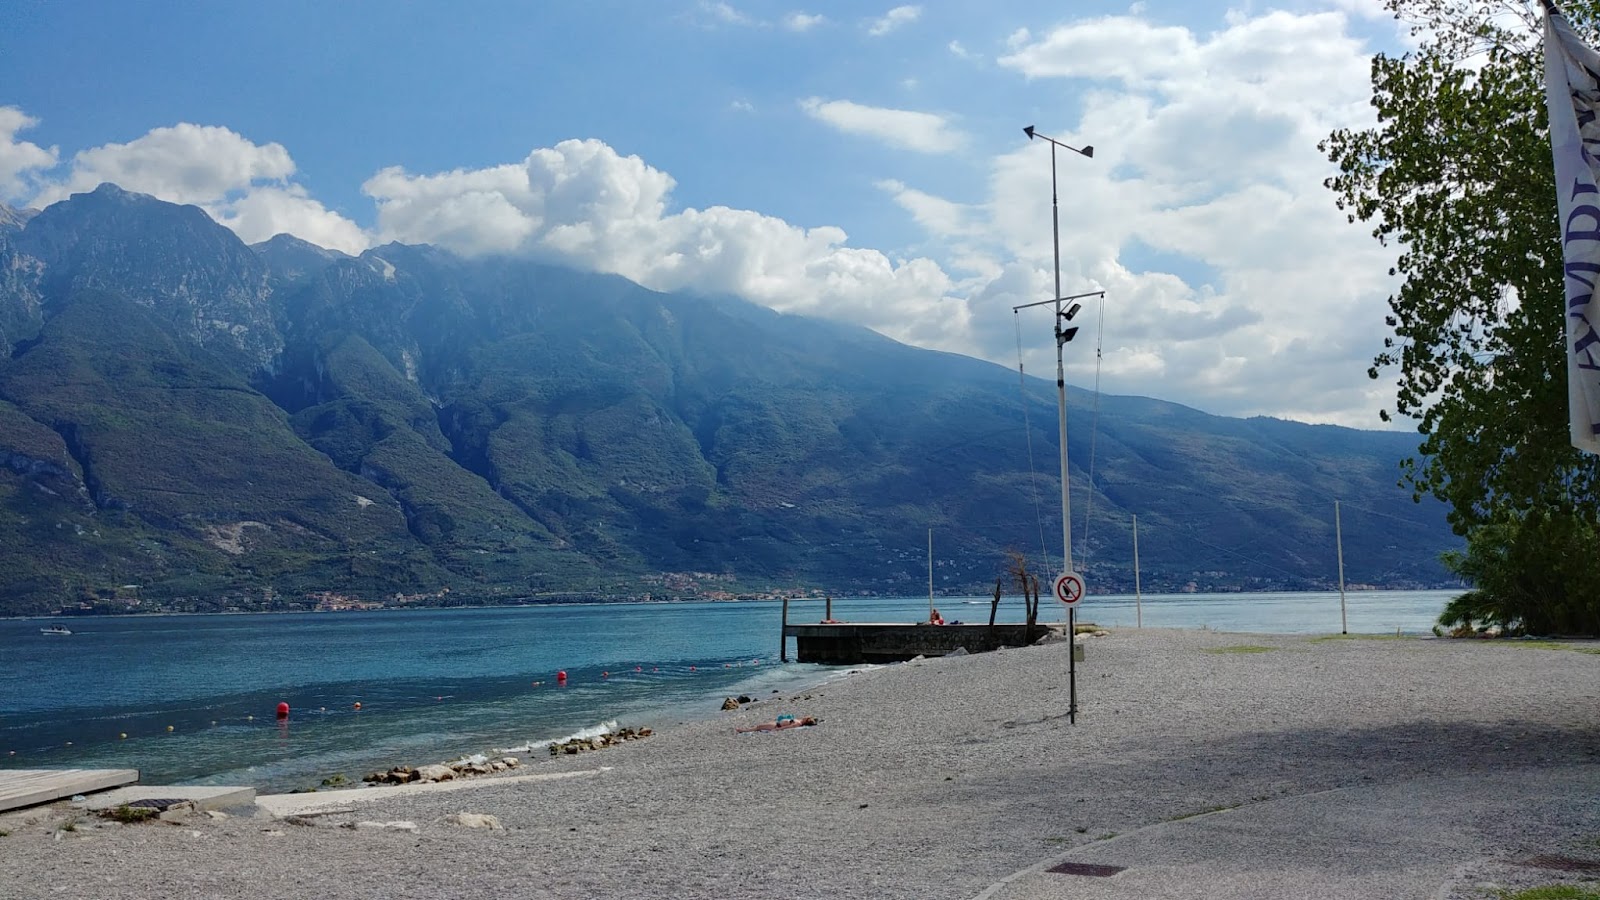 Foto av Spiaggia Campione del Garda omgiven av klippor